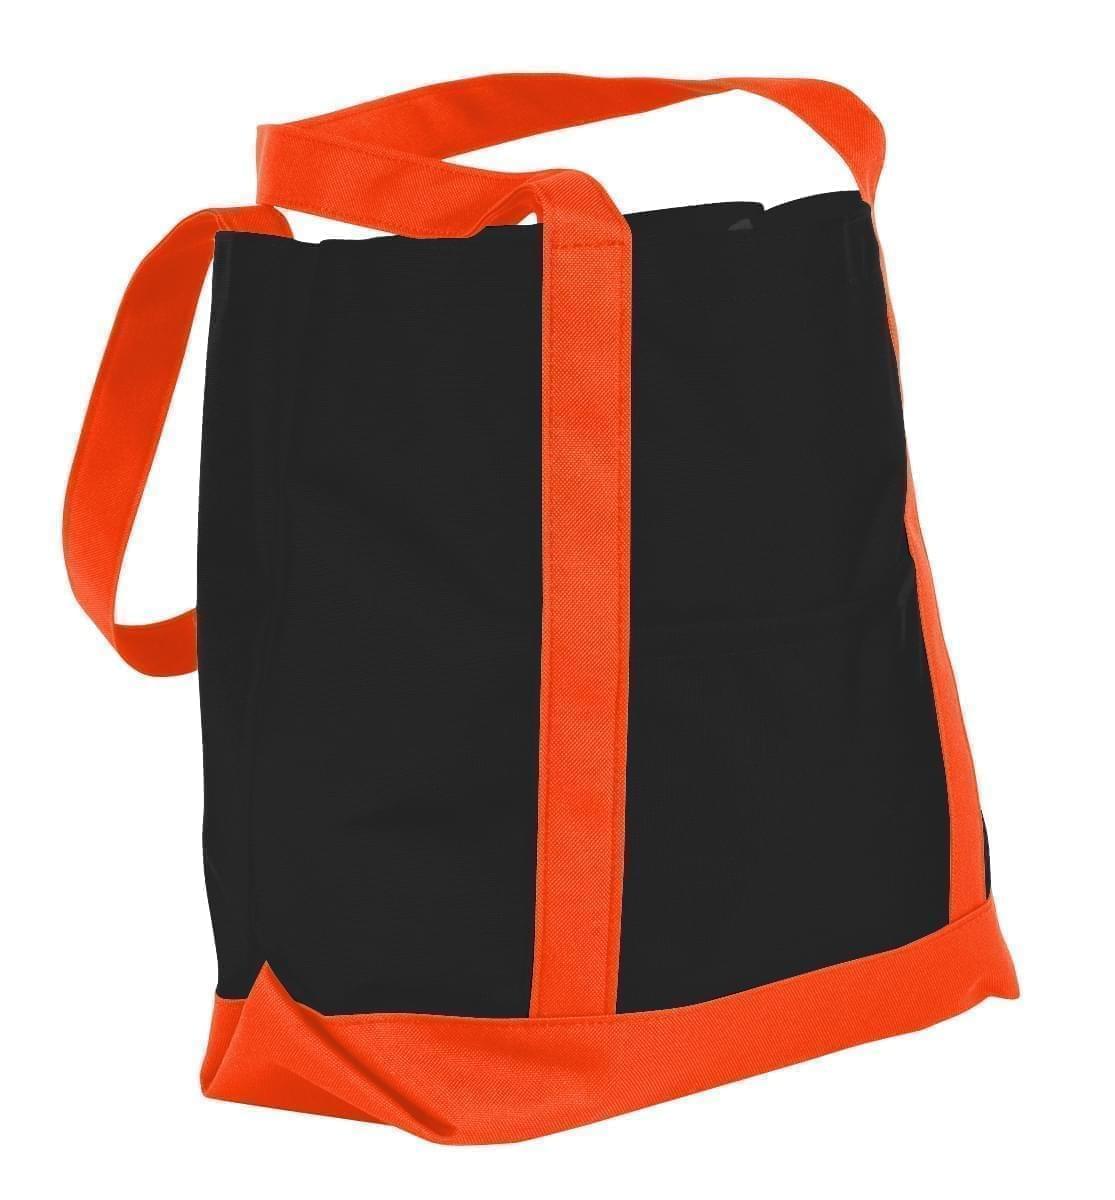 USA Made Canvas Fashion Tote Bags, Black-Orange, XAACL1UAHJ